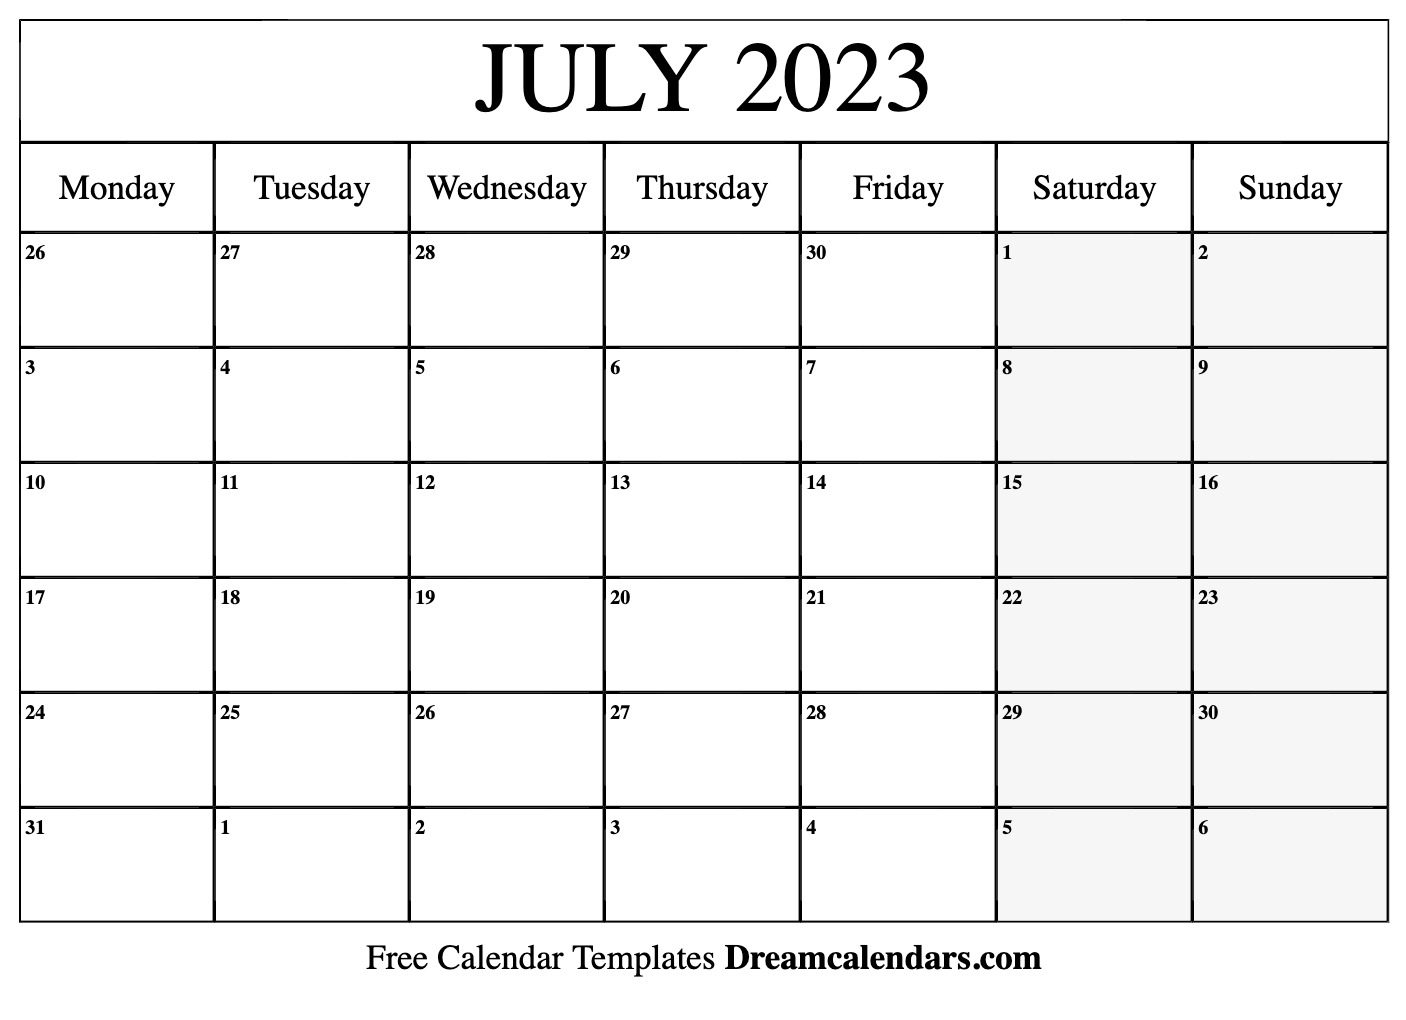 printable-july-2023-calendar-free-12-templates